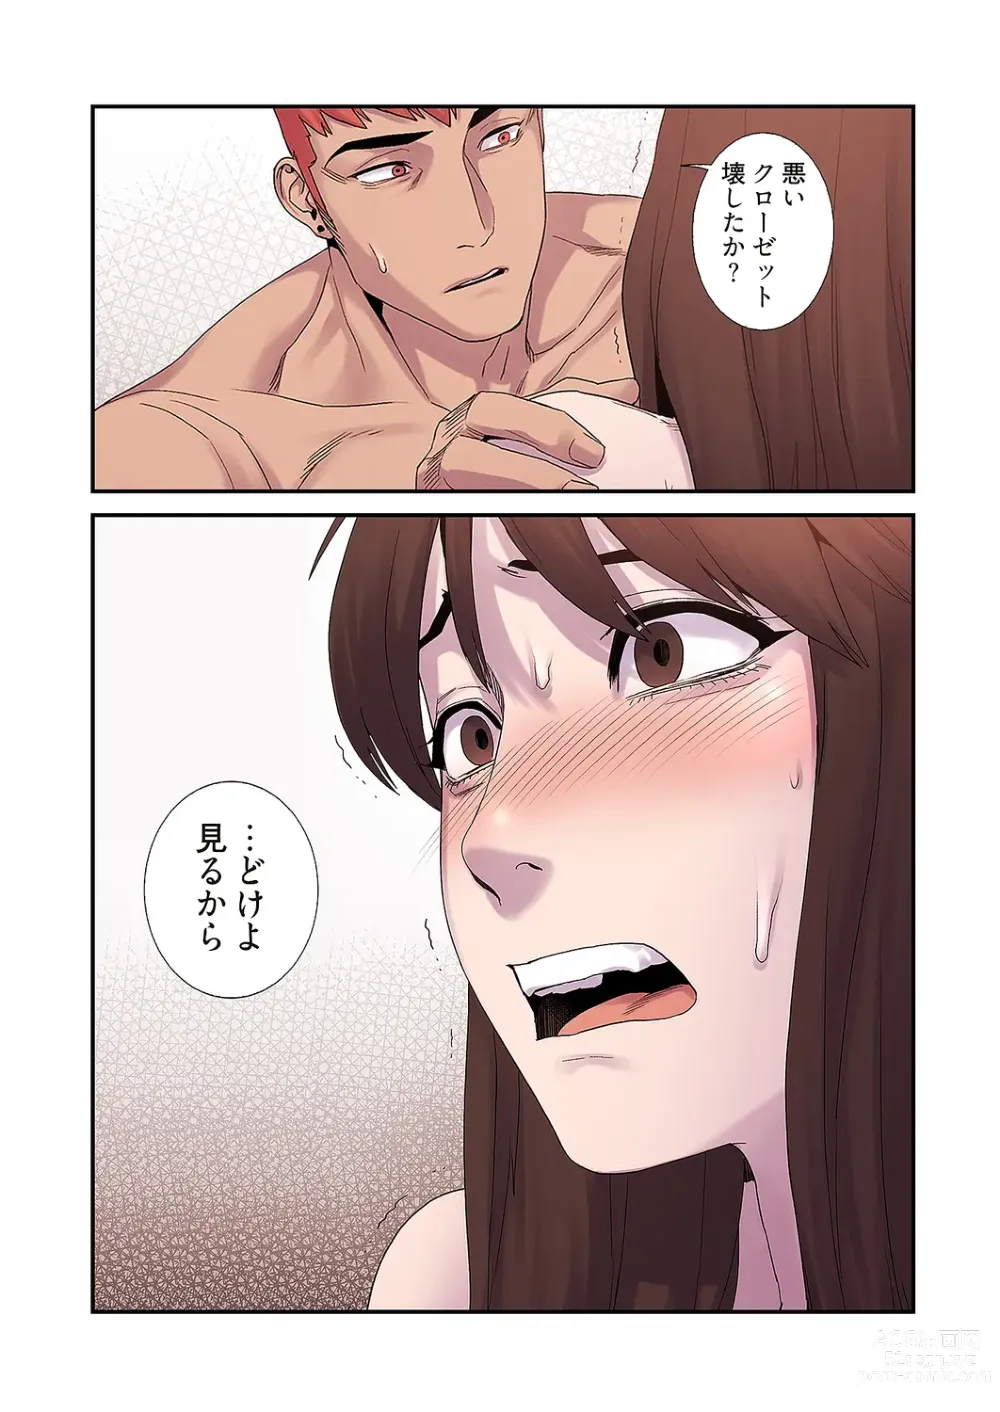 Page 177 of manga Seizan Tobaku (Special Edition) 1